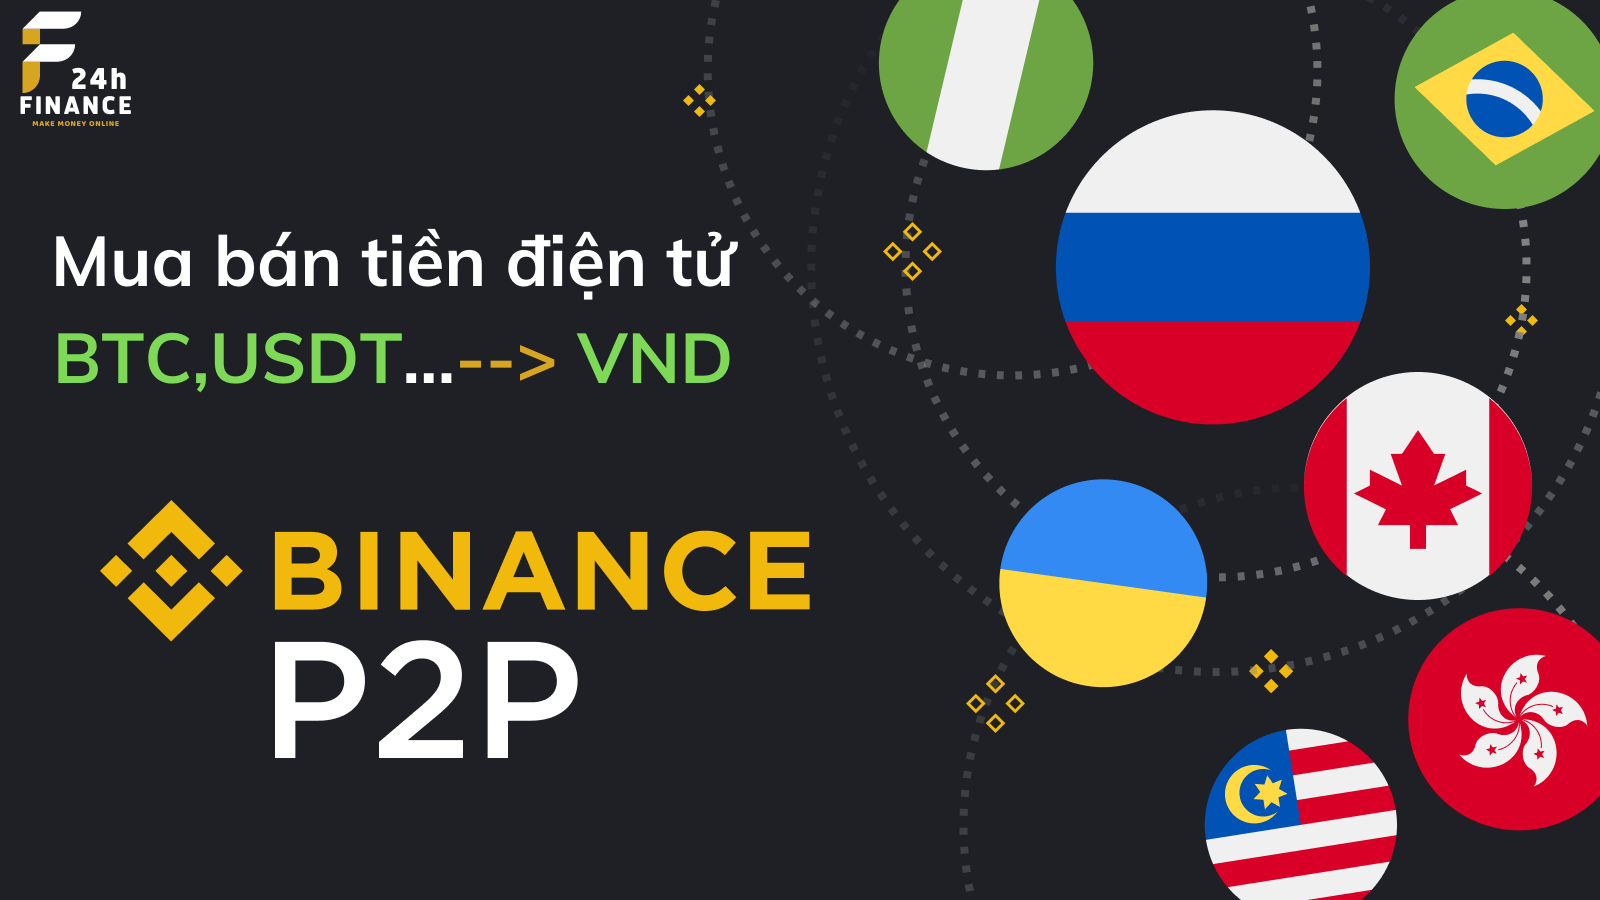 finance24h.info